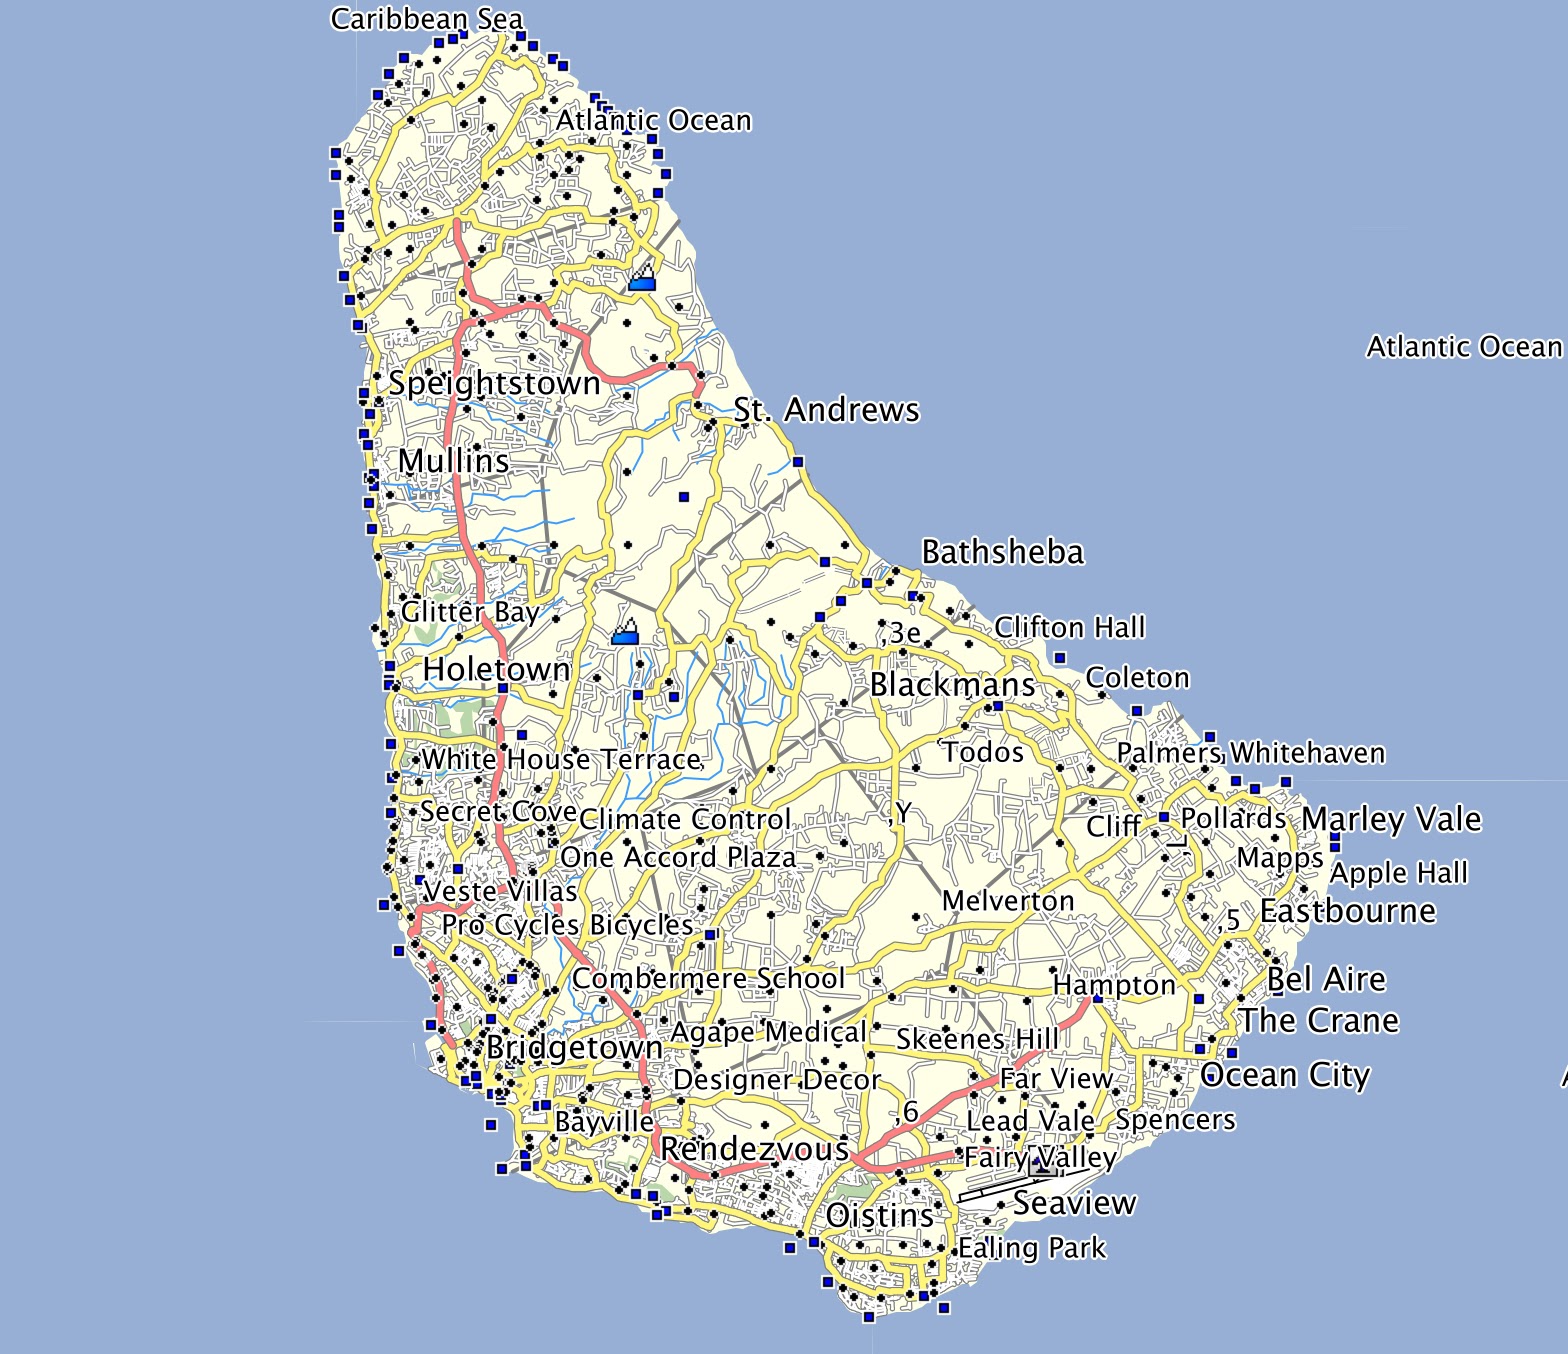 Barbados GPS Map Garmin Nuvi Basecamp.tiff